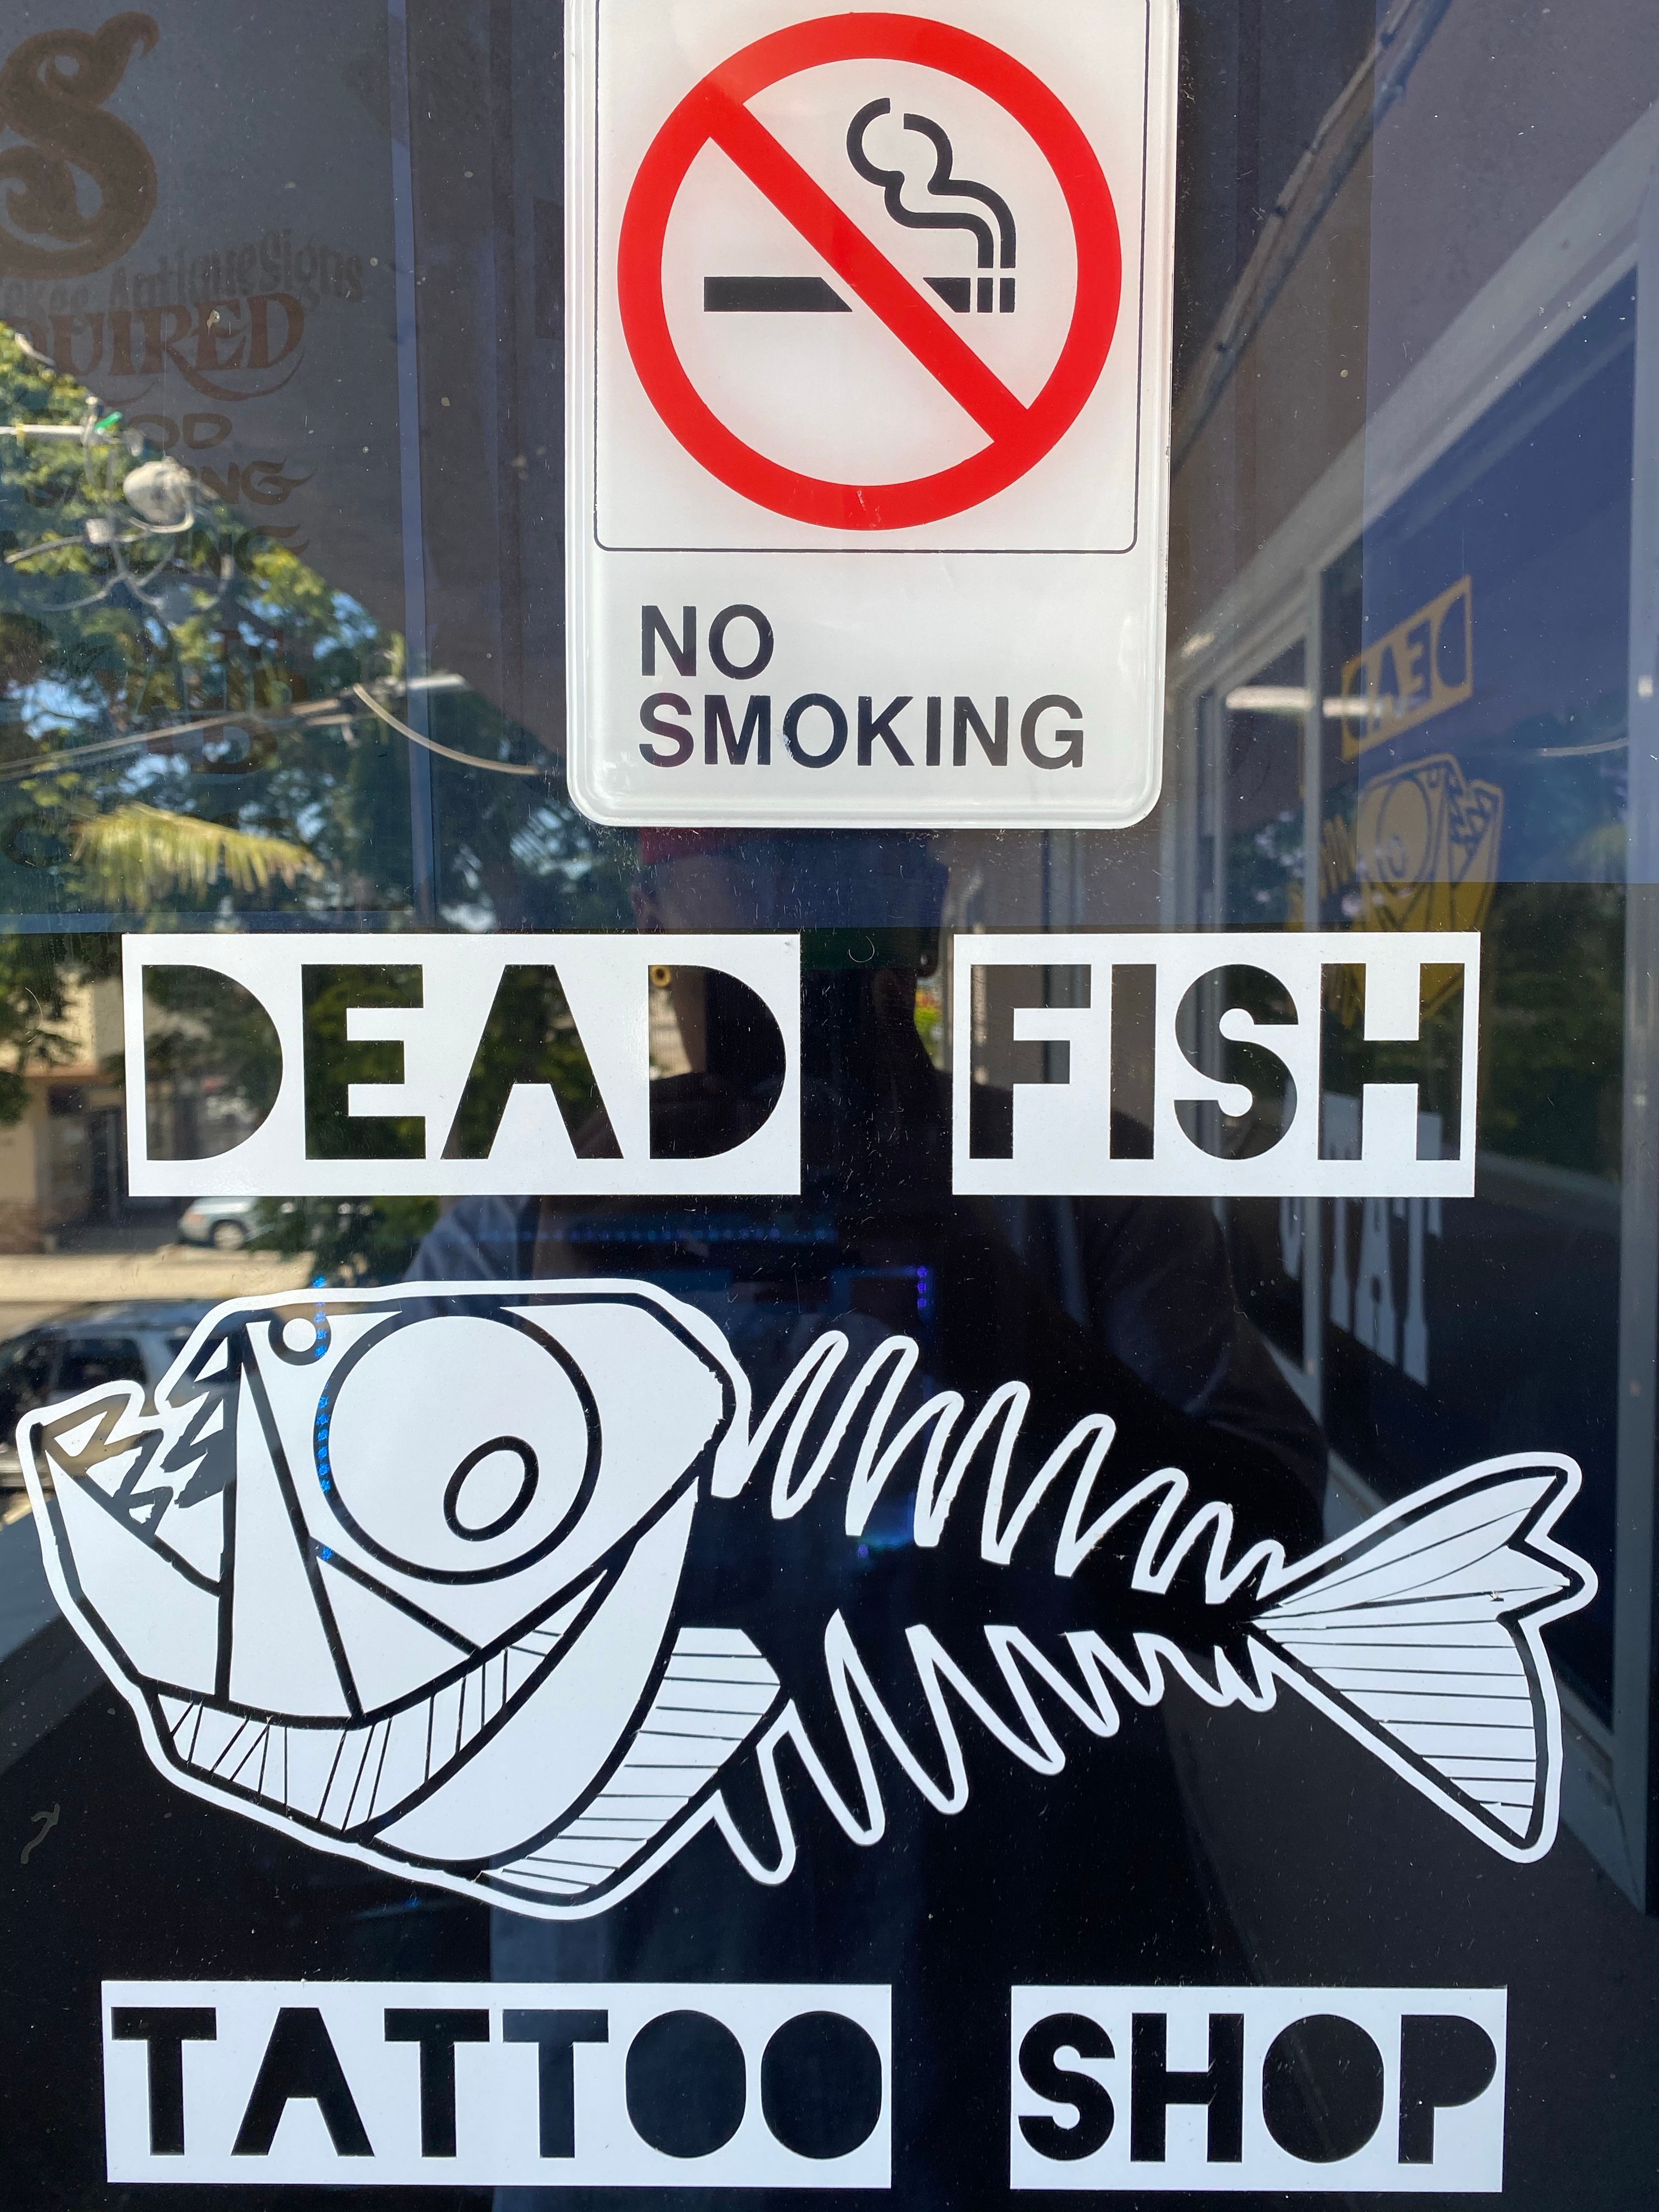 free No smoking sign image Free Photo Download  FreeImages